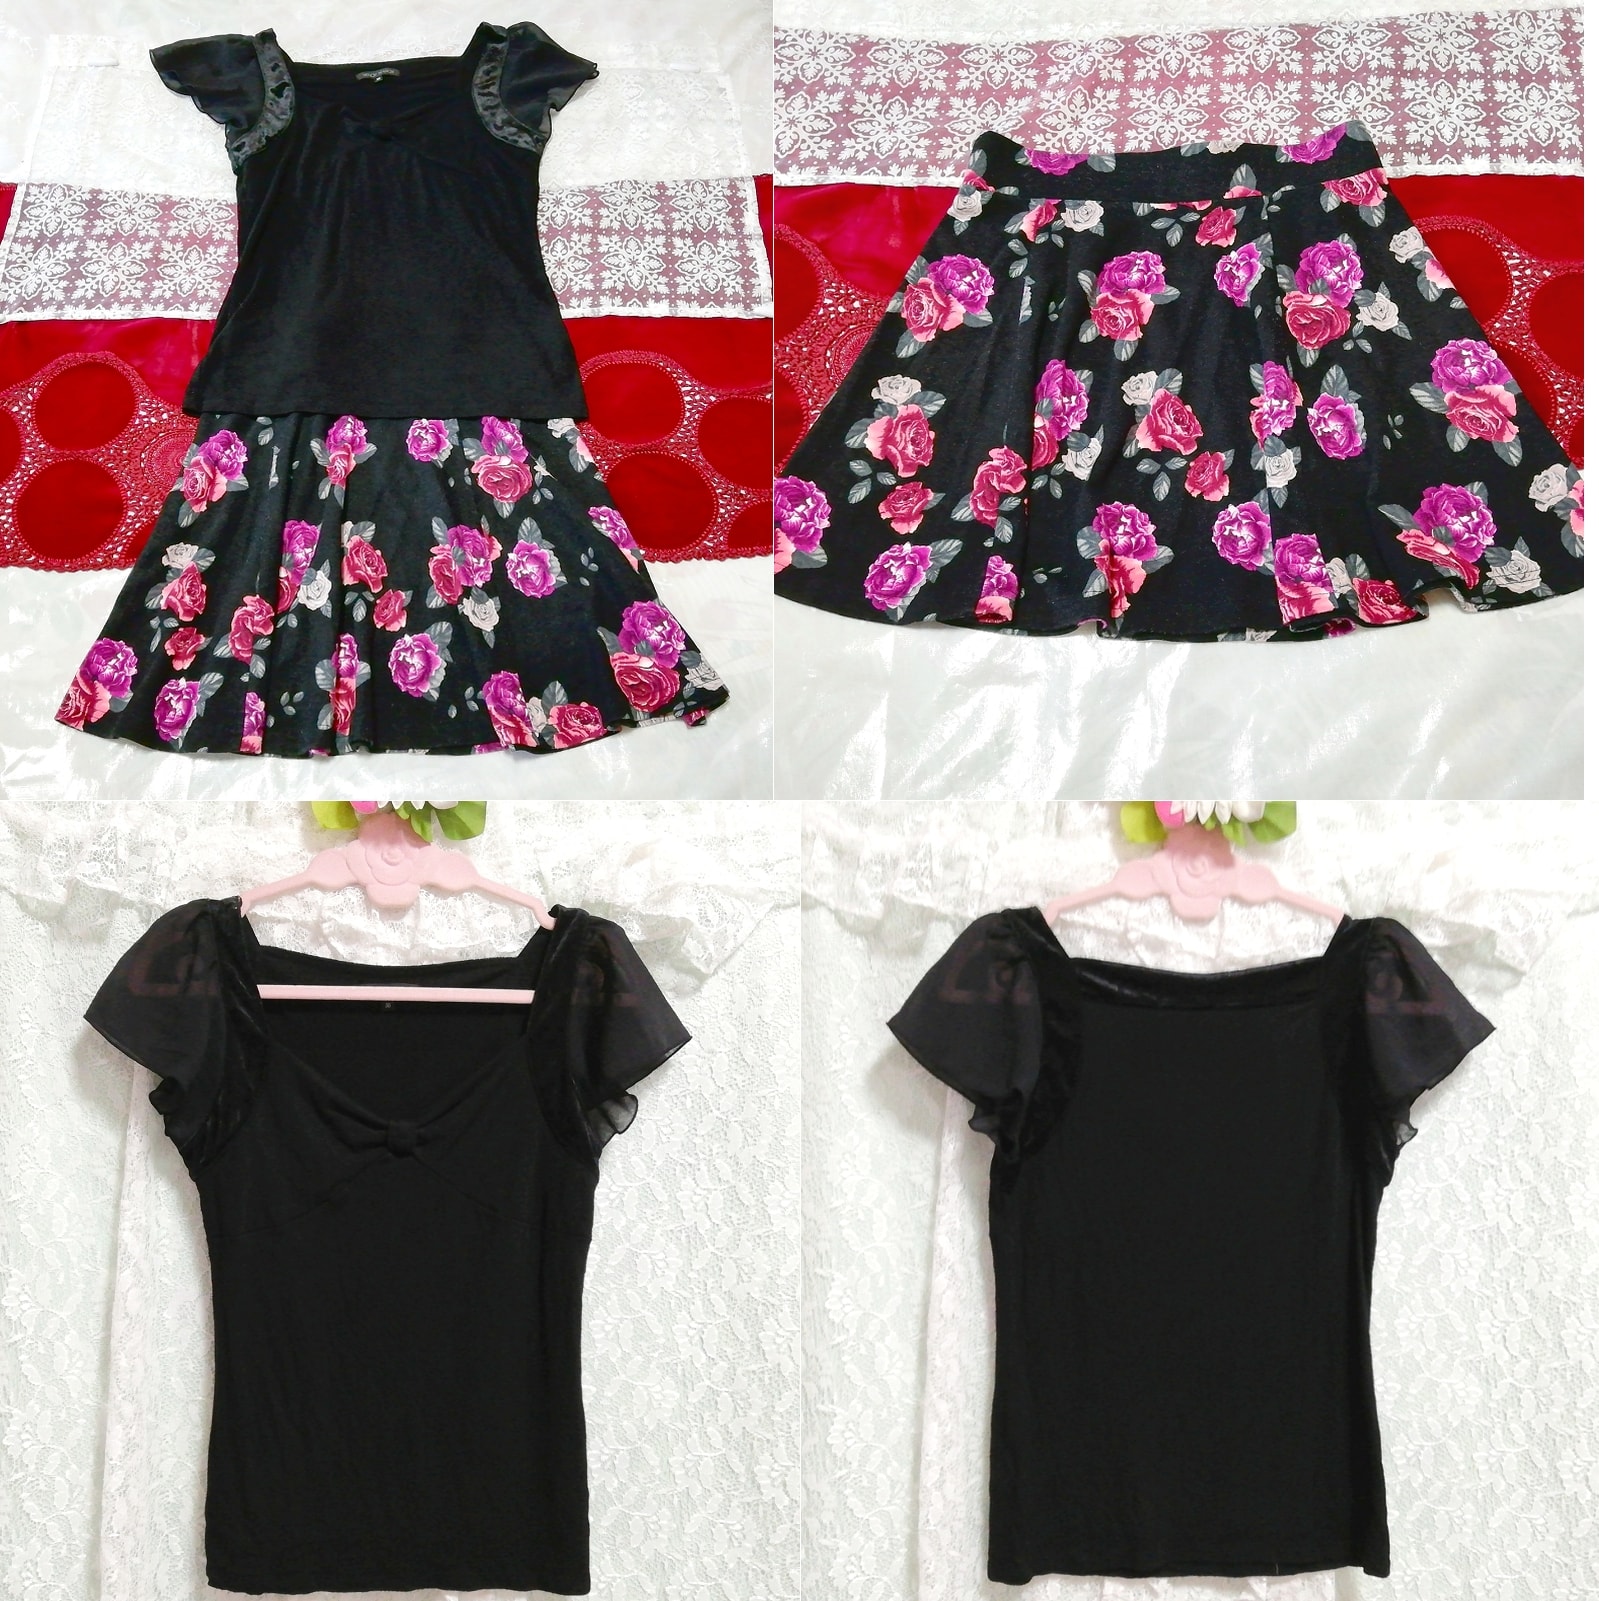 Black cut and sew tunic negligee nightgown black rose floral pattern miniskirt 2P, fashion, ladies' fashion, nightwear, pajamas